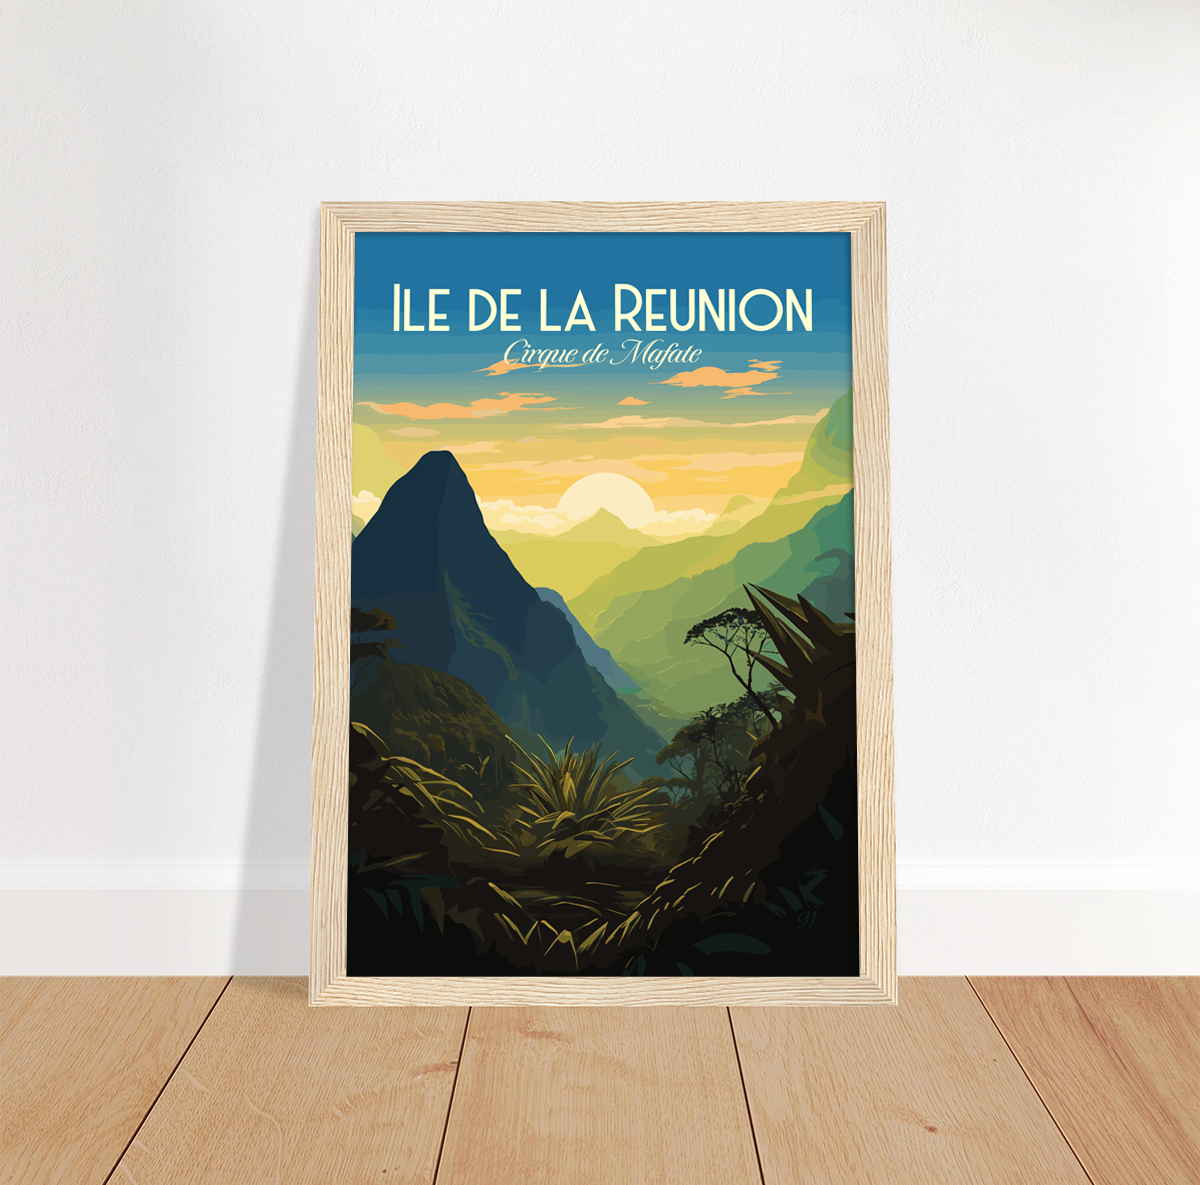 Reunion - Mafate poster by bon voyage design